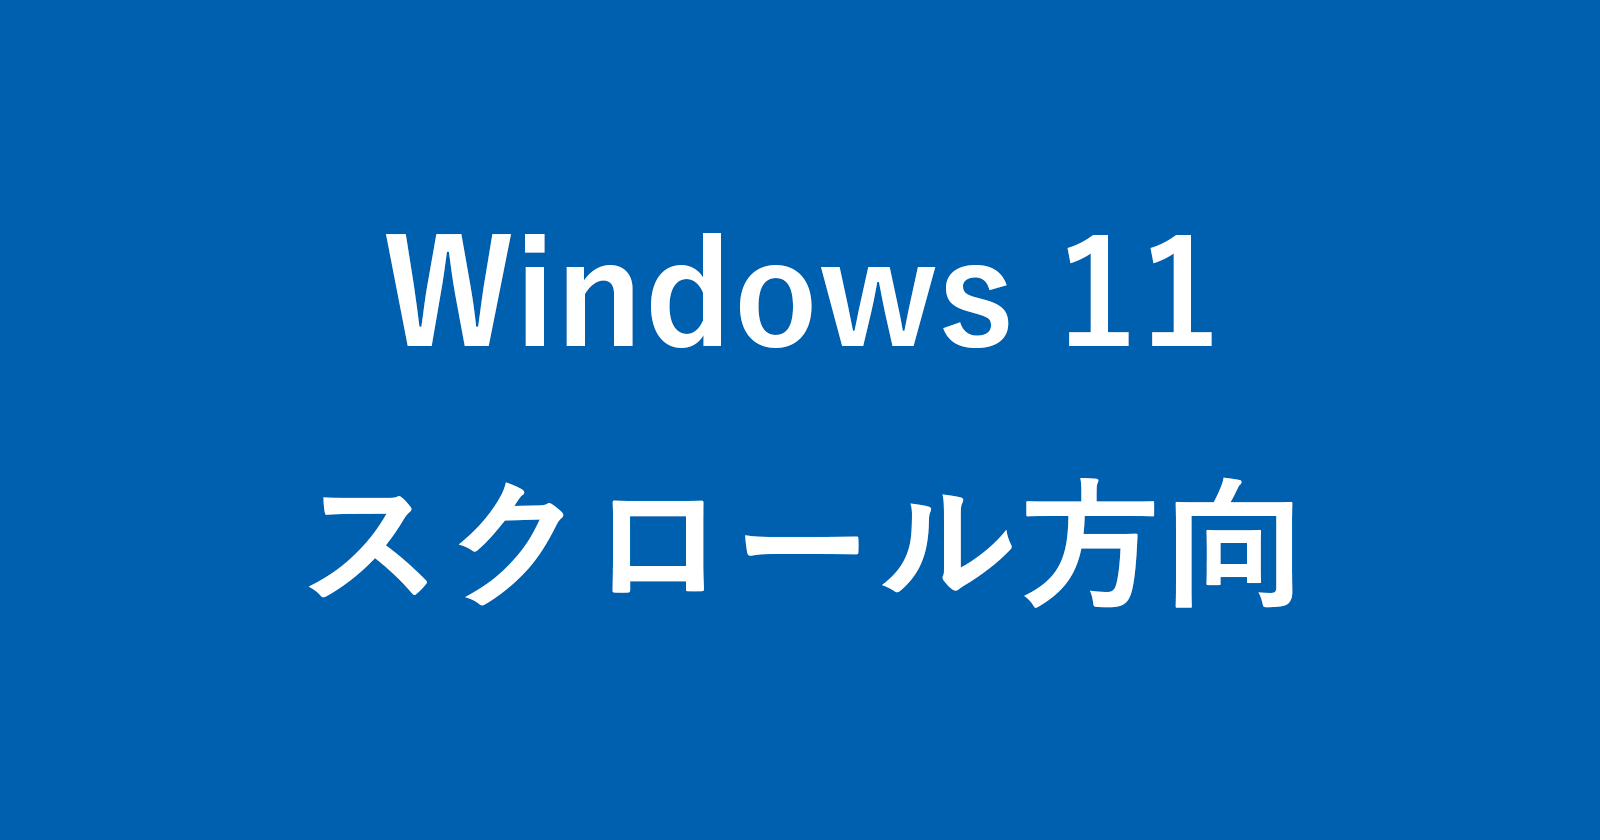 windows 11 scroll